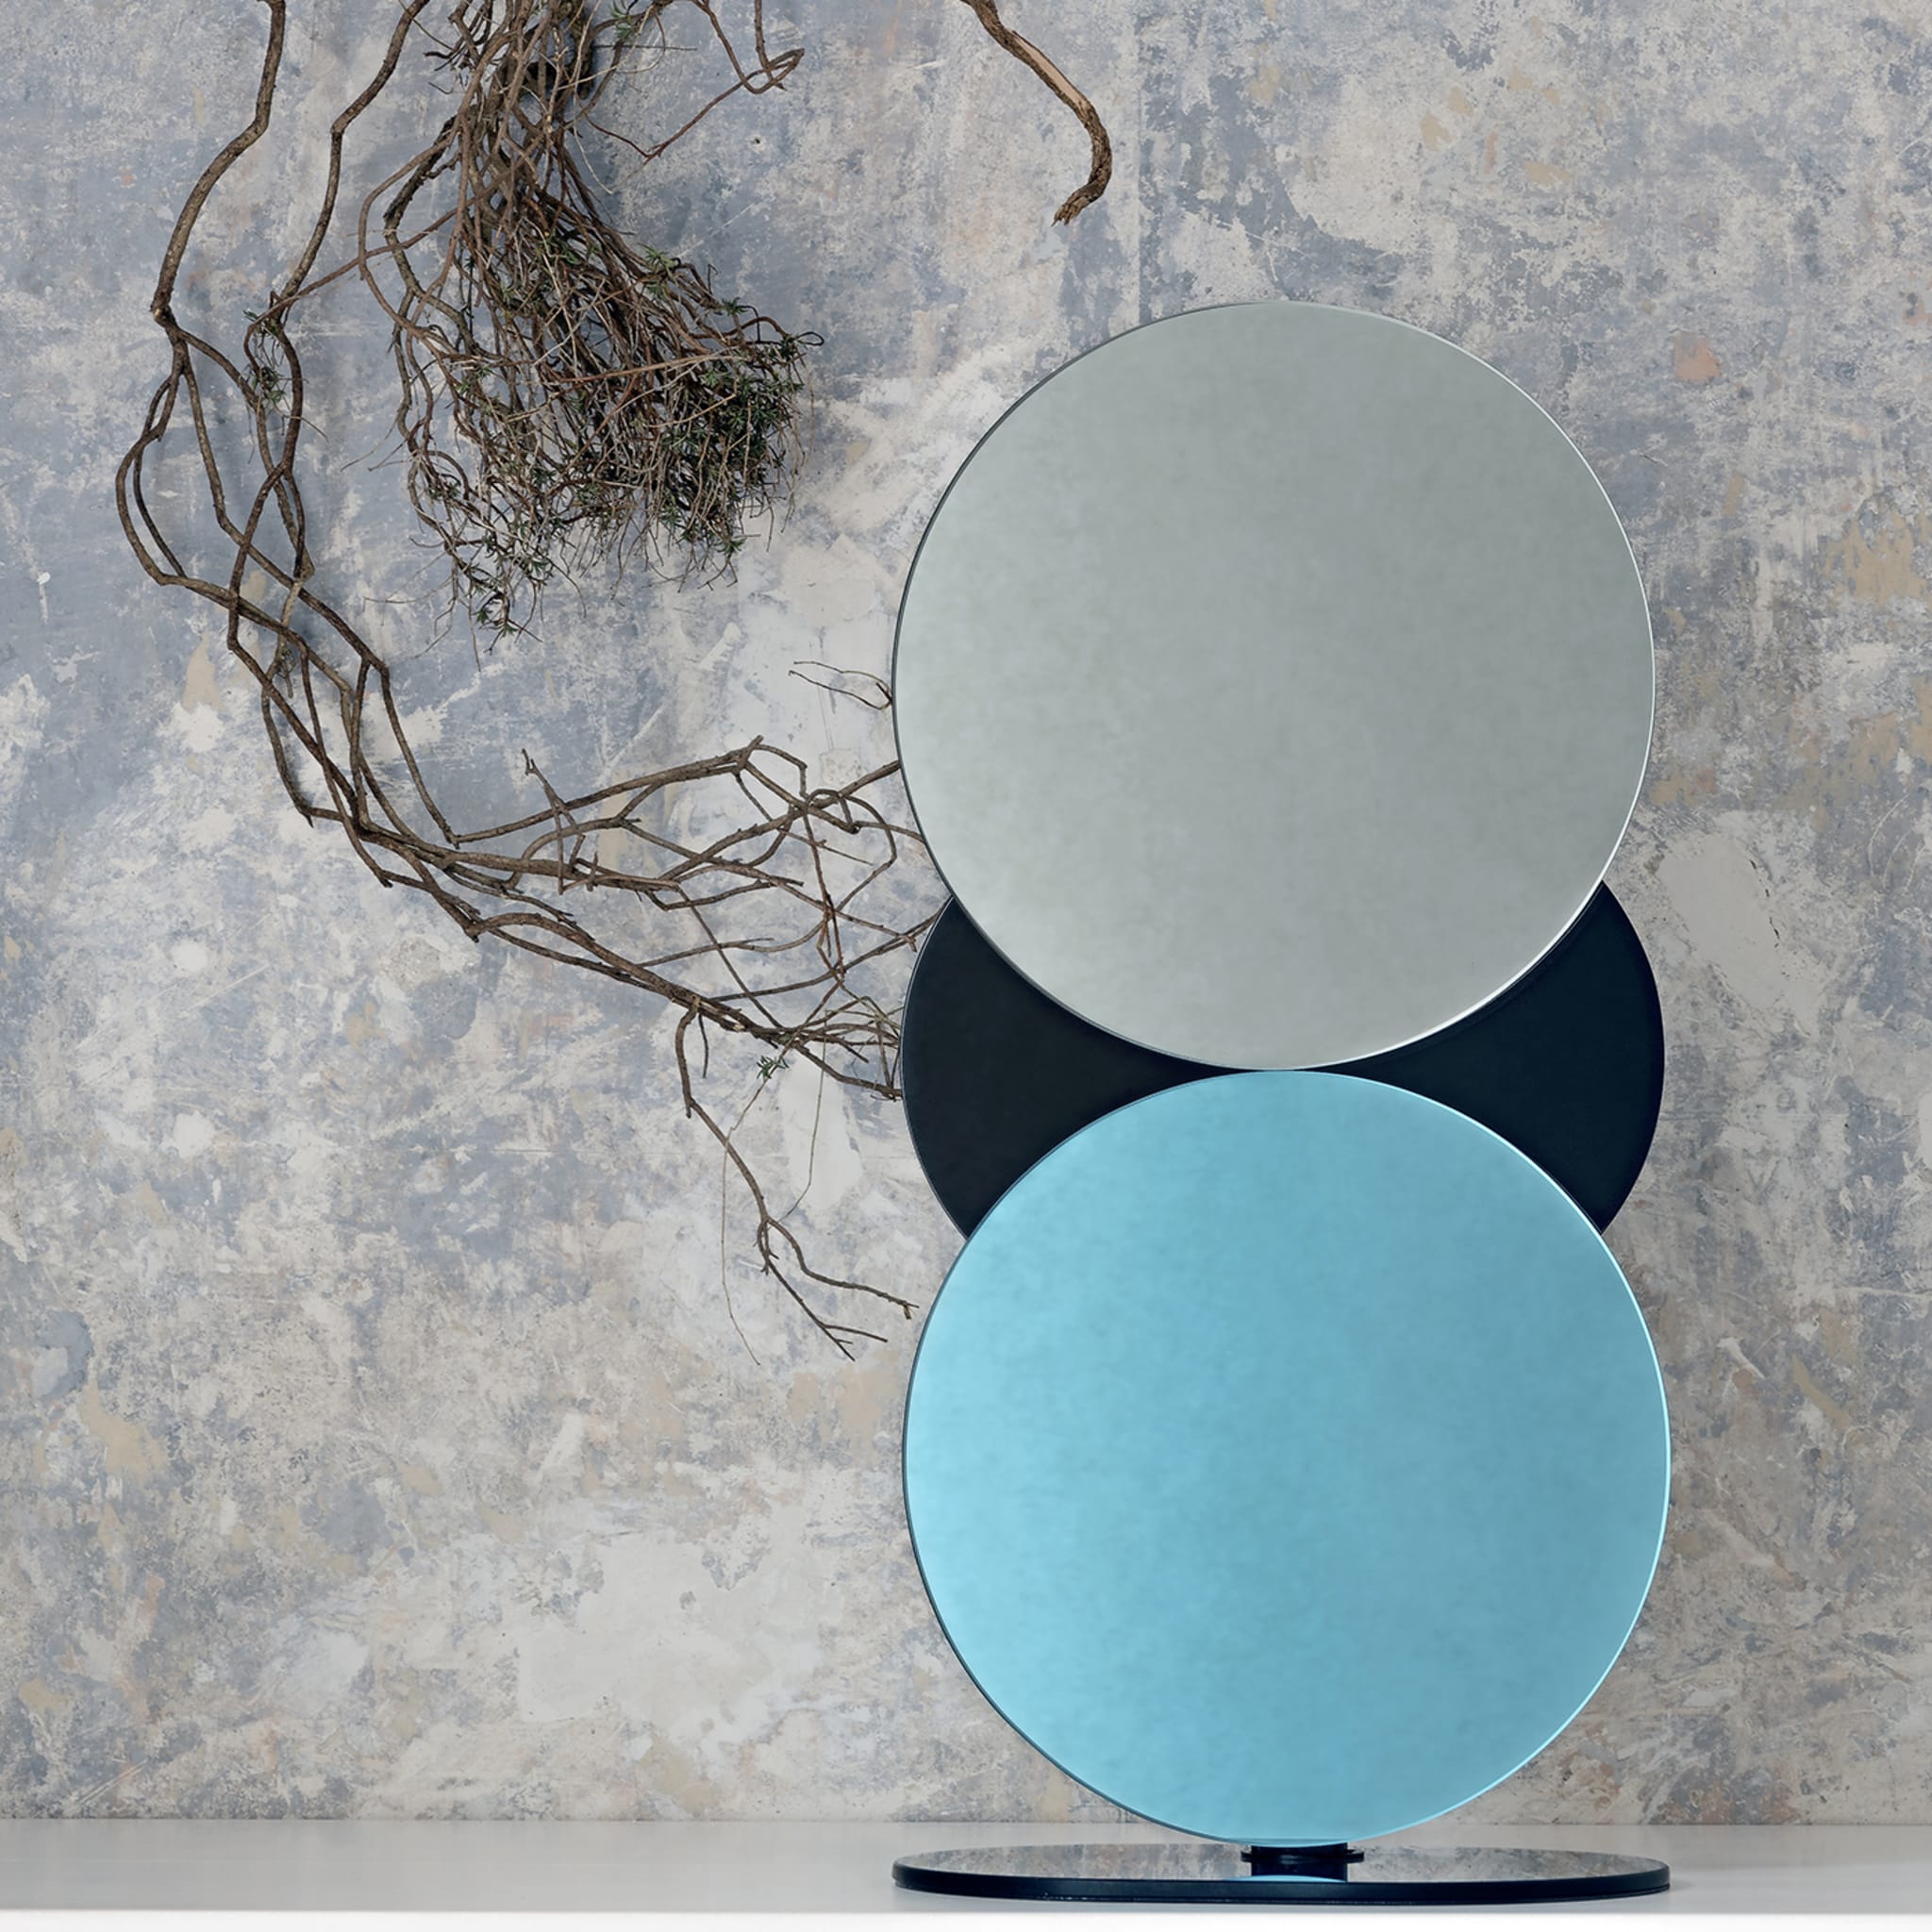 Equilibrista L2 Tabletop Mirror by Giovanni Botticelli x Swing Design Gallery - Alternative view 1